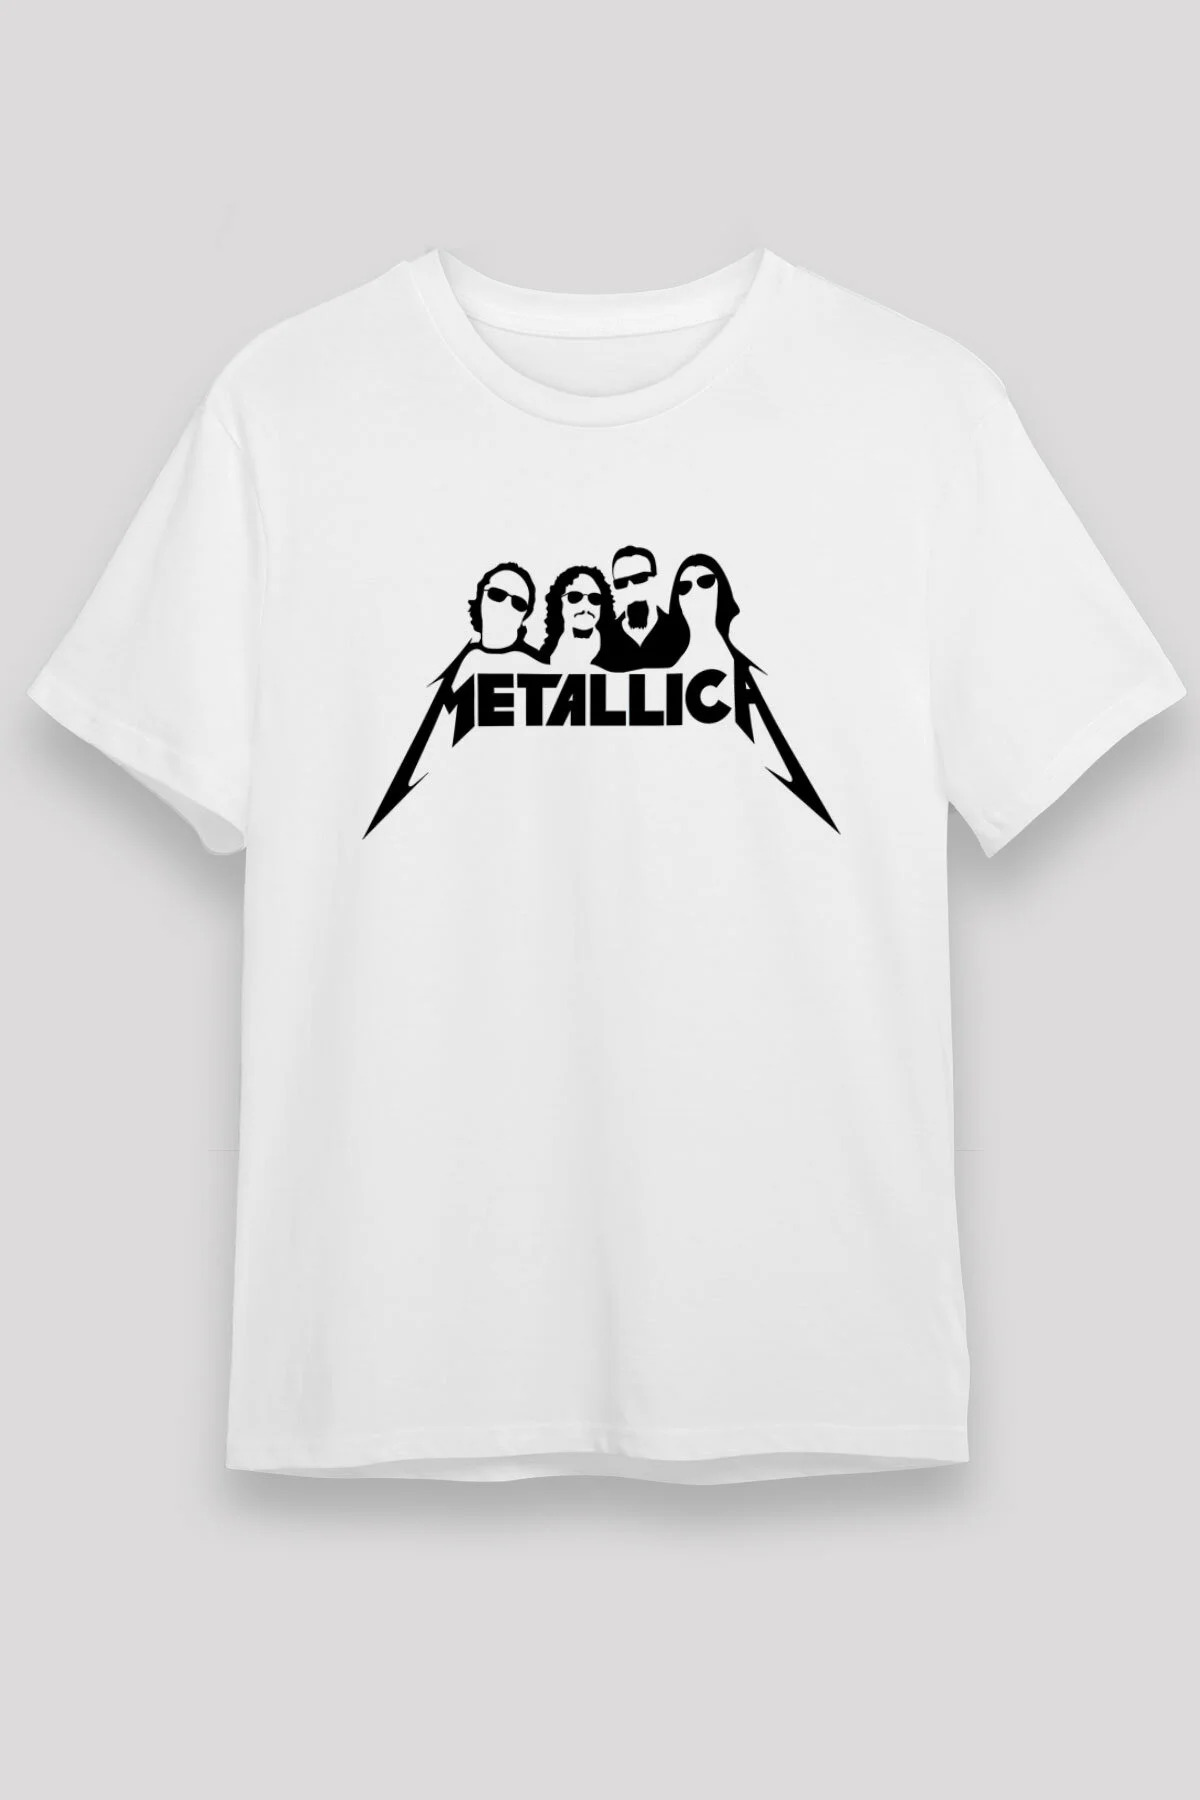 Metallica T shirt, Music Band ,Unisex Tshirt 10/